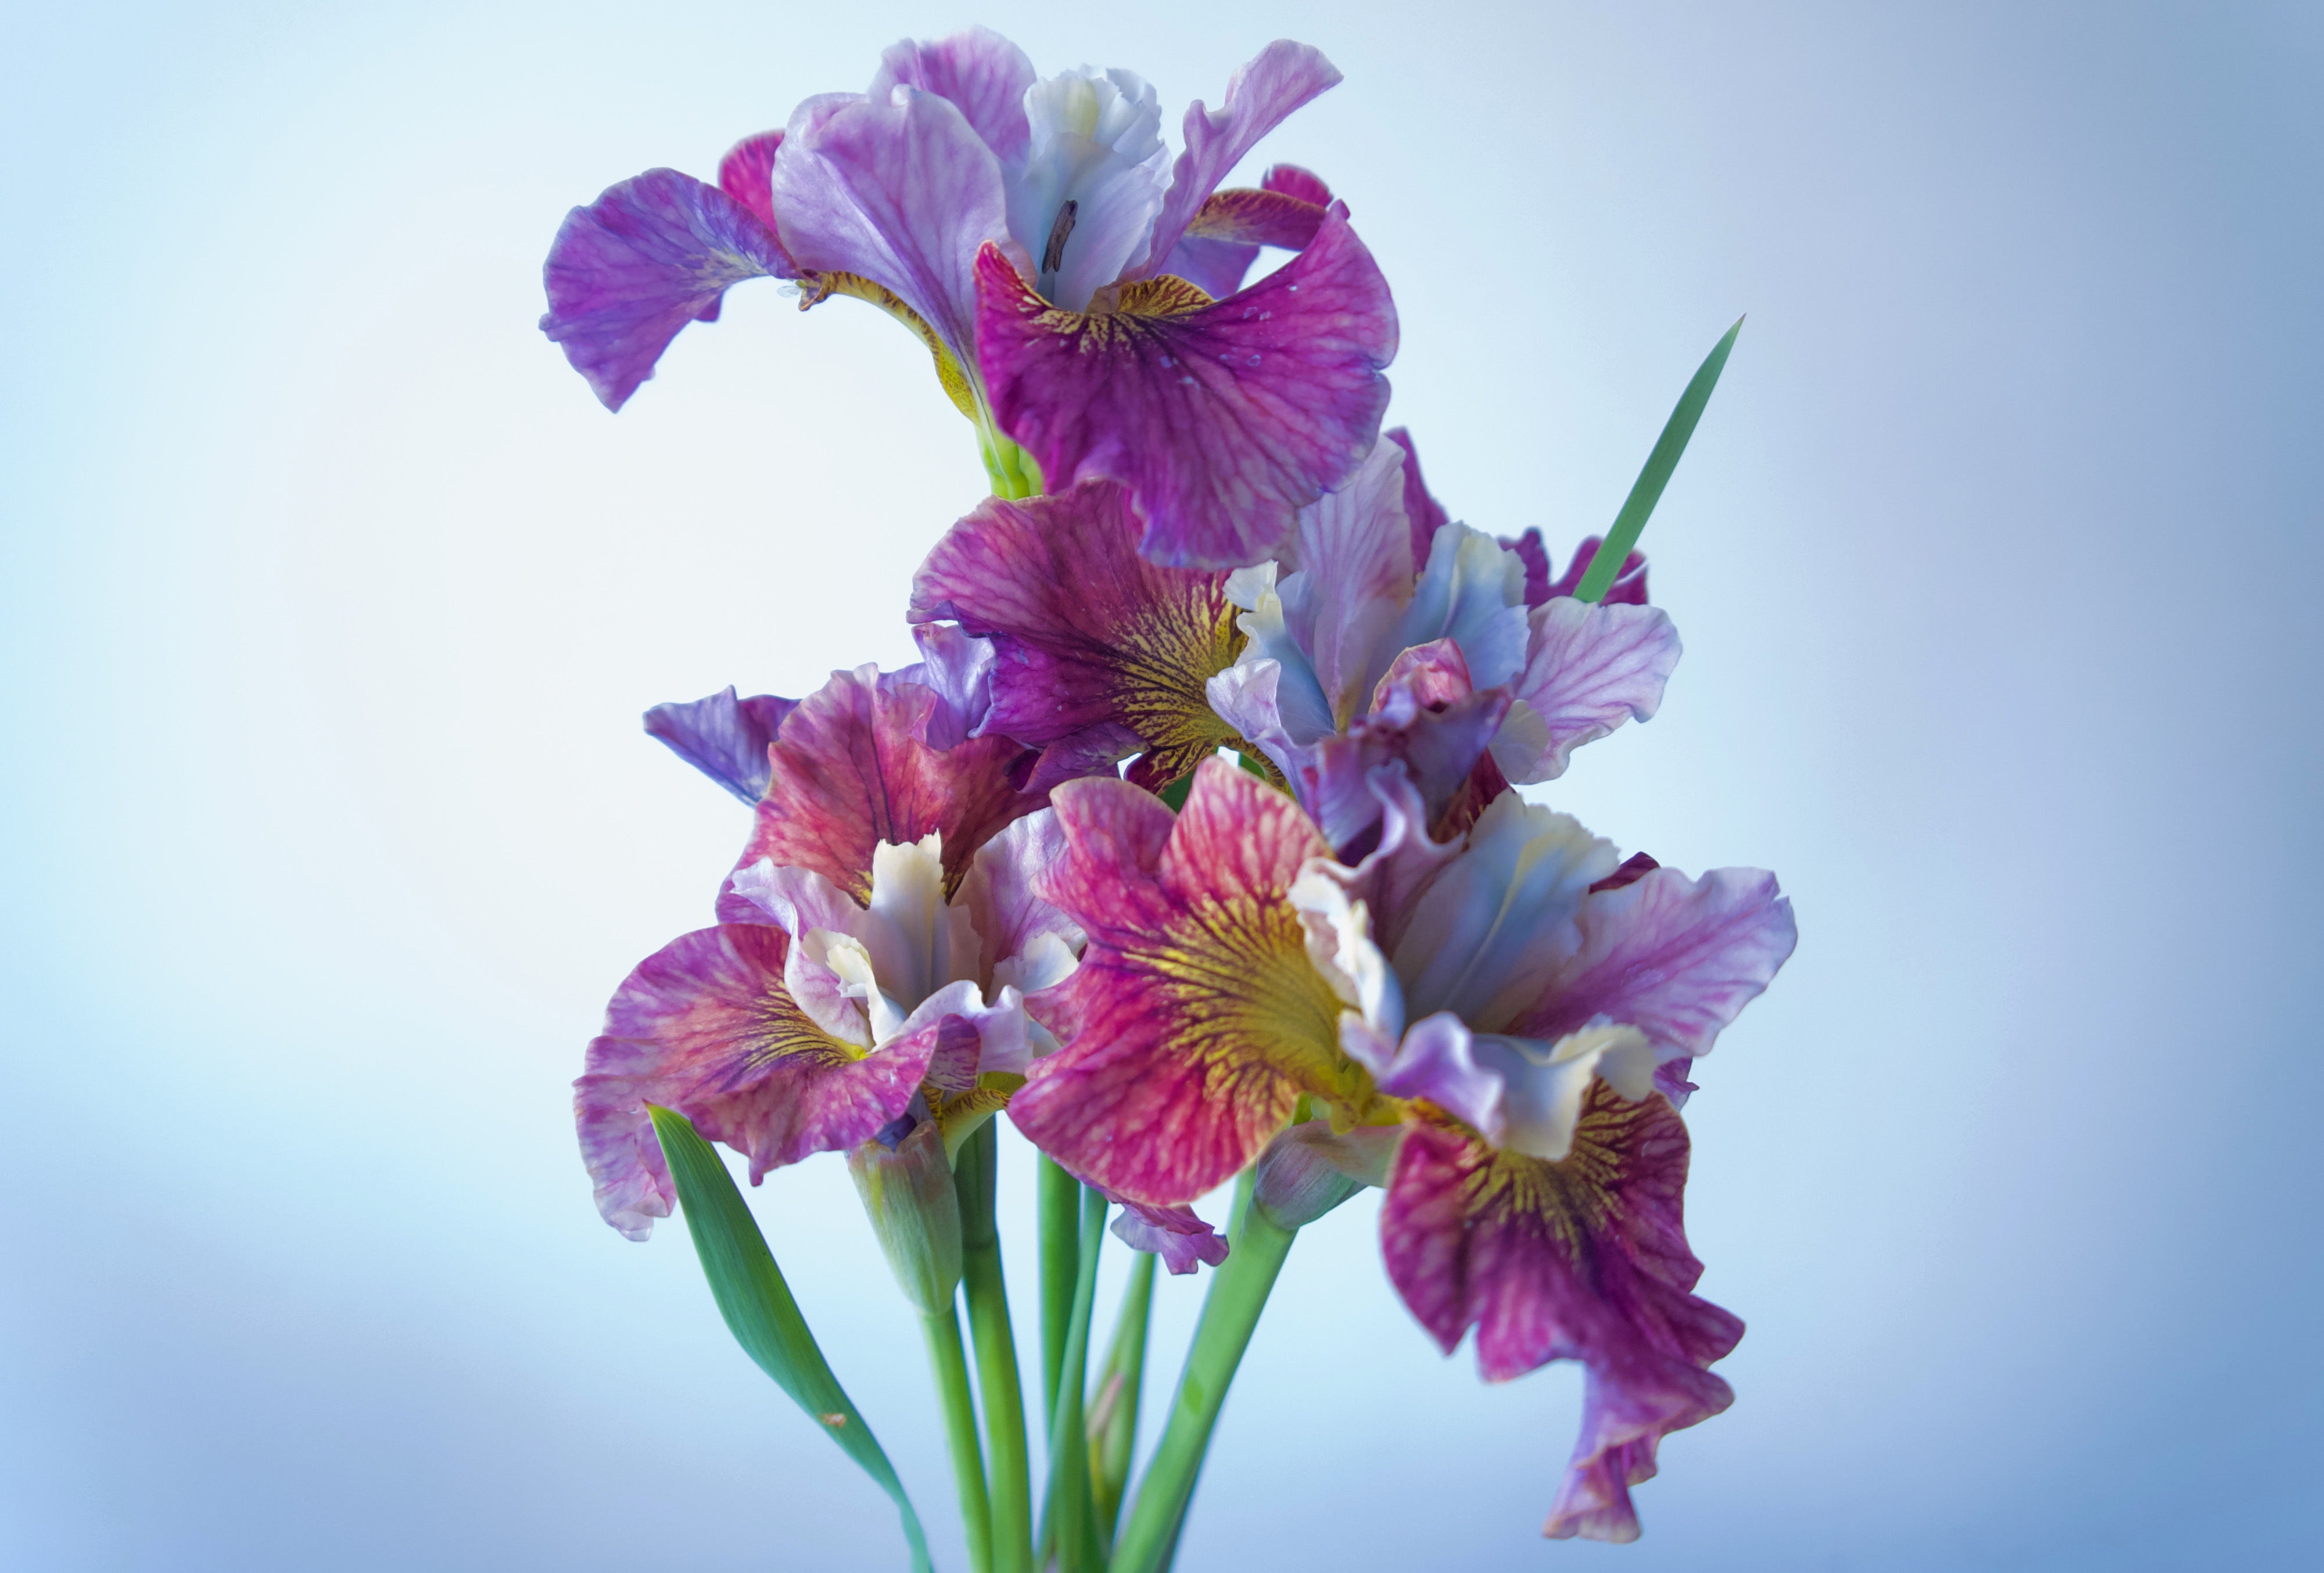 Bearded Iris. Portland Oregon Florists Fieldwork Flowers located at Wellspent Market. Order Flowers Online.